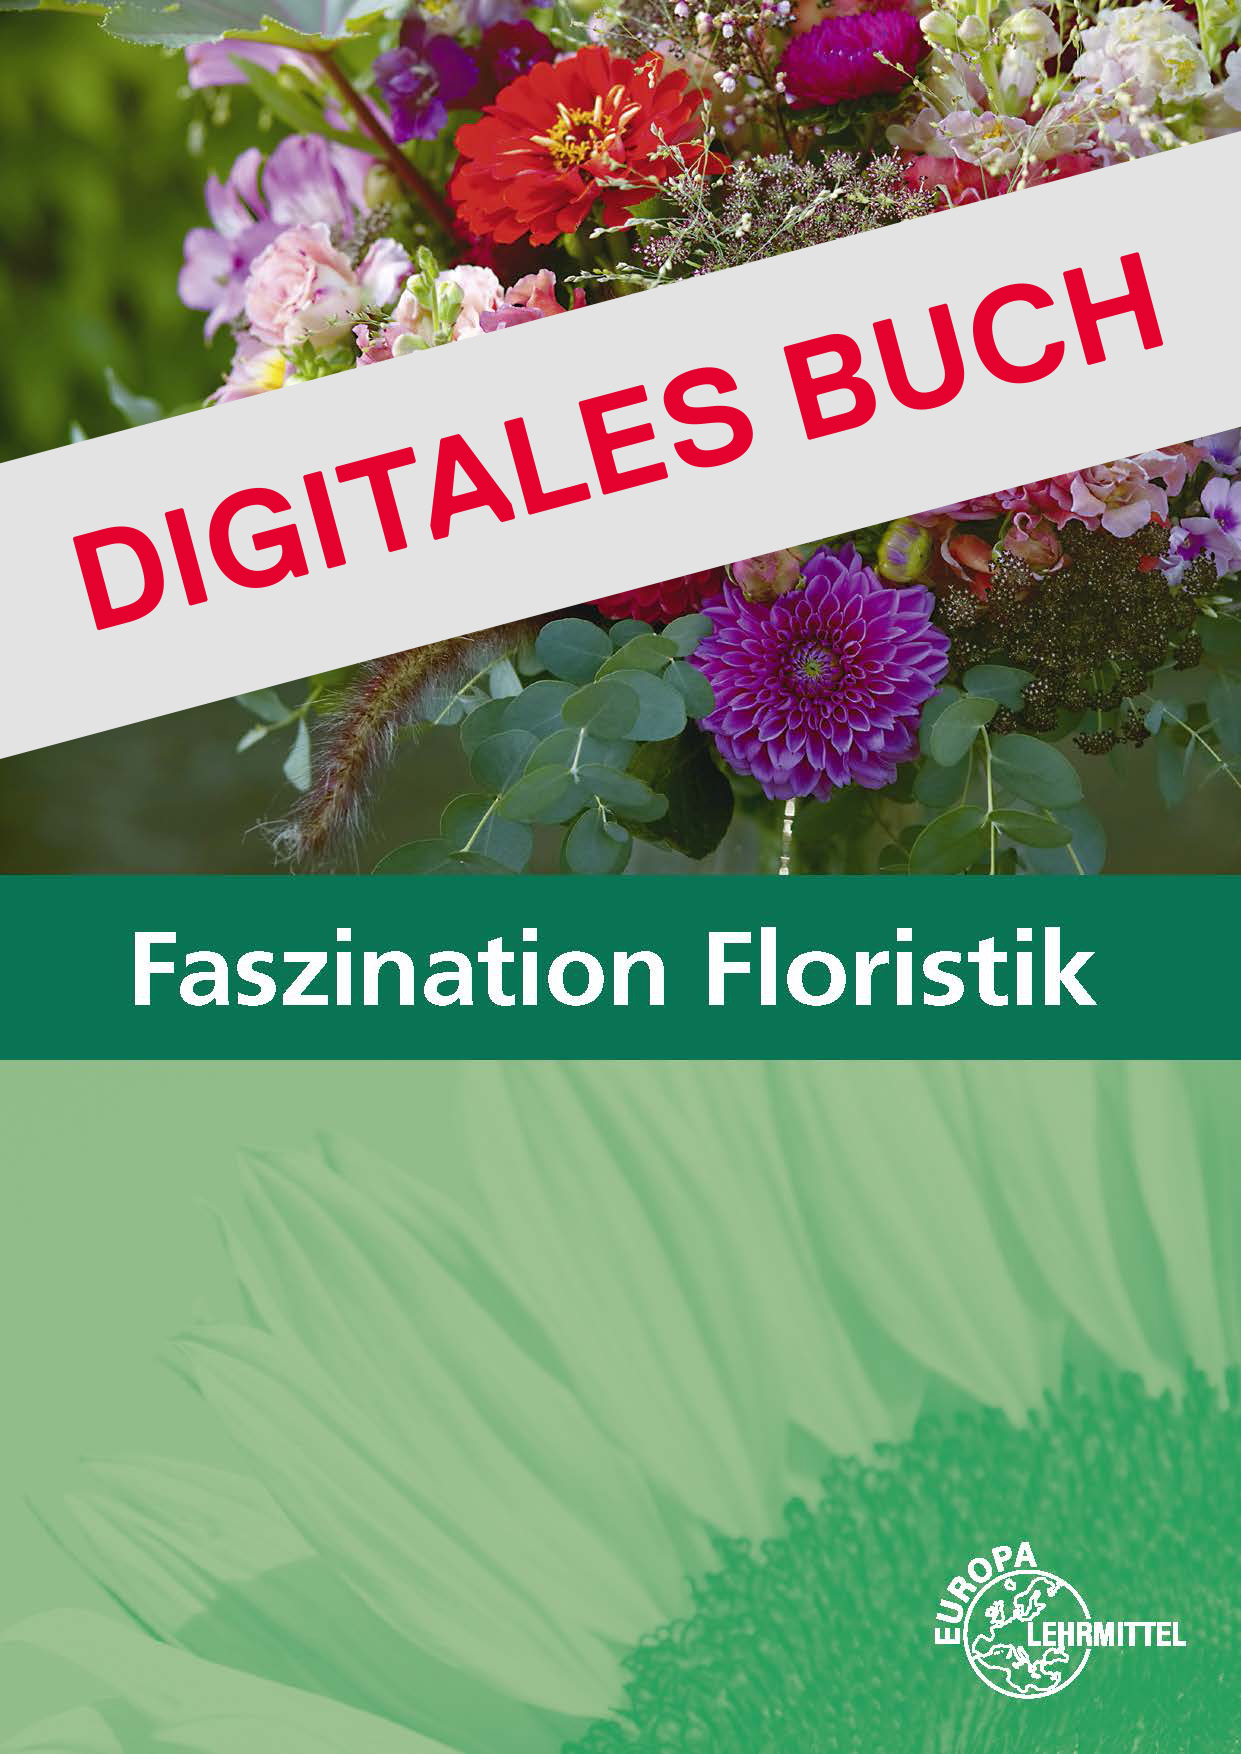 Faszination Floristik - Digitales Buch